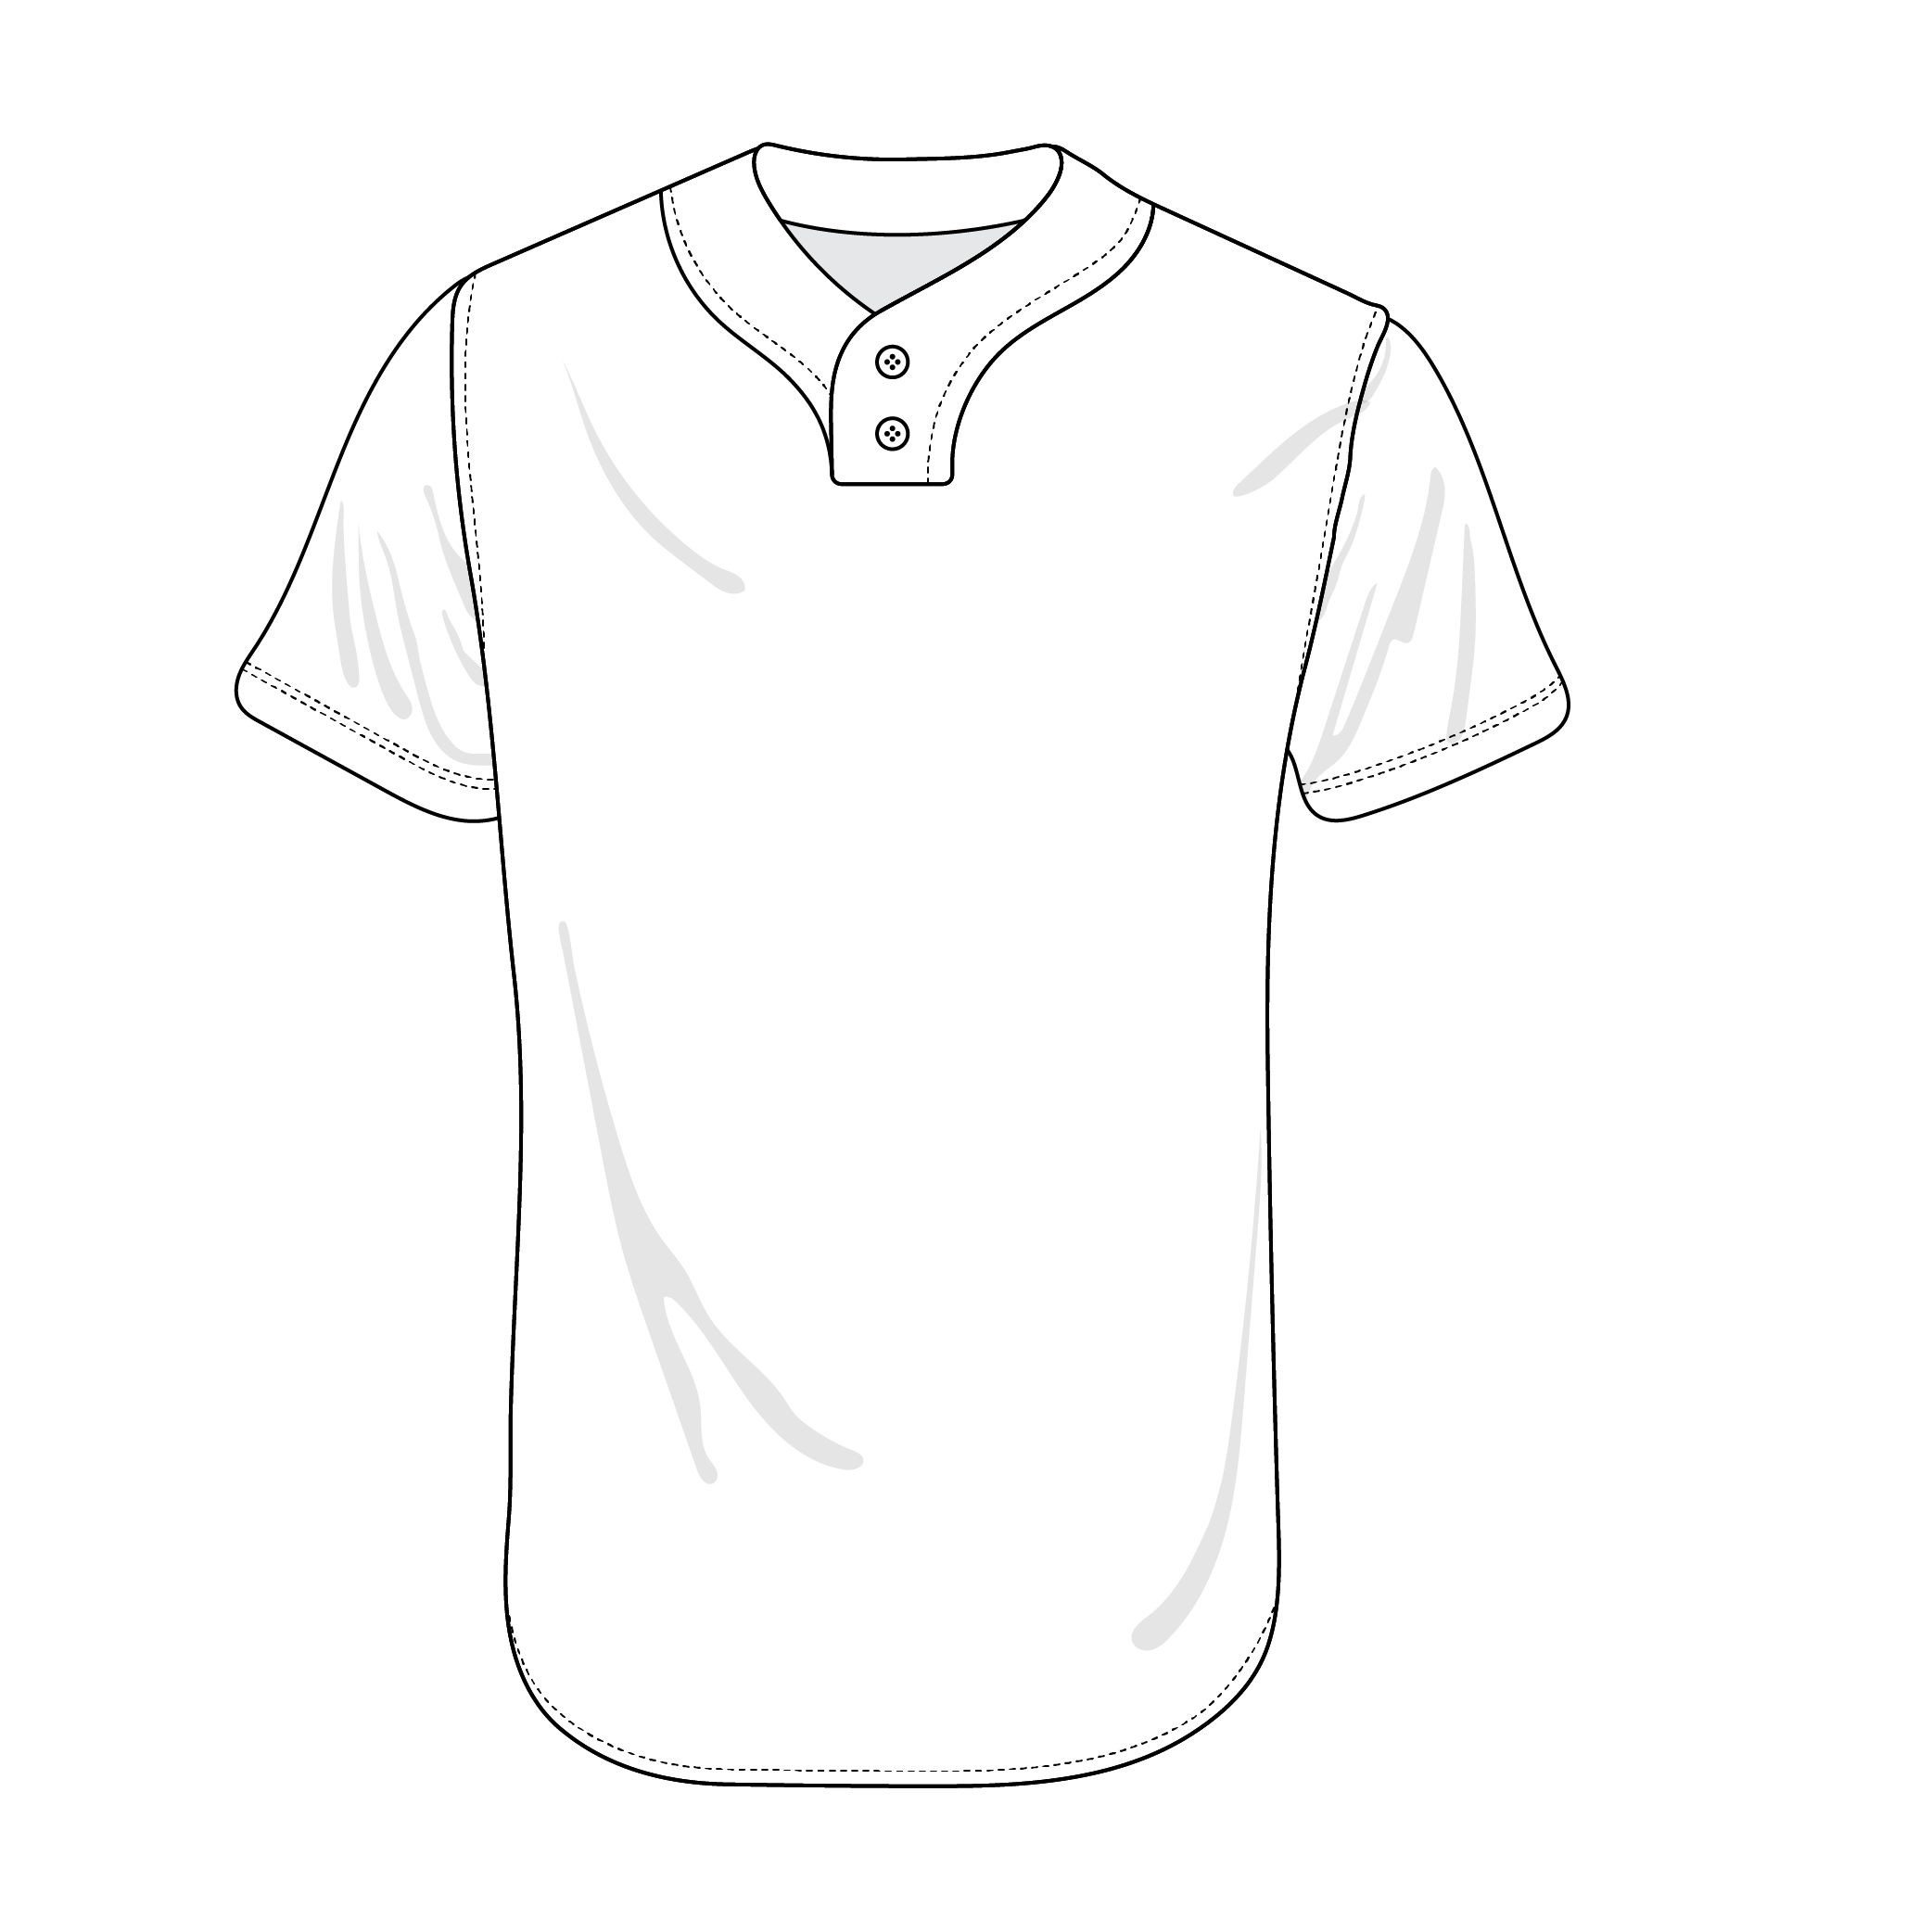 Clubhouse Original: Standard 2-Buttoned Baseball Jersey